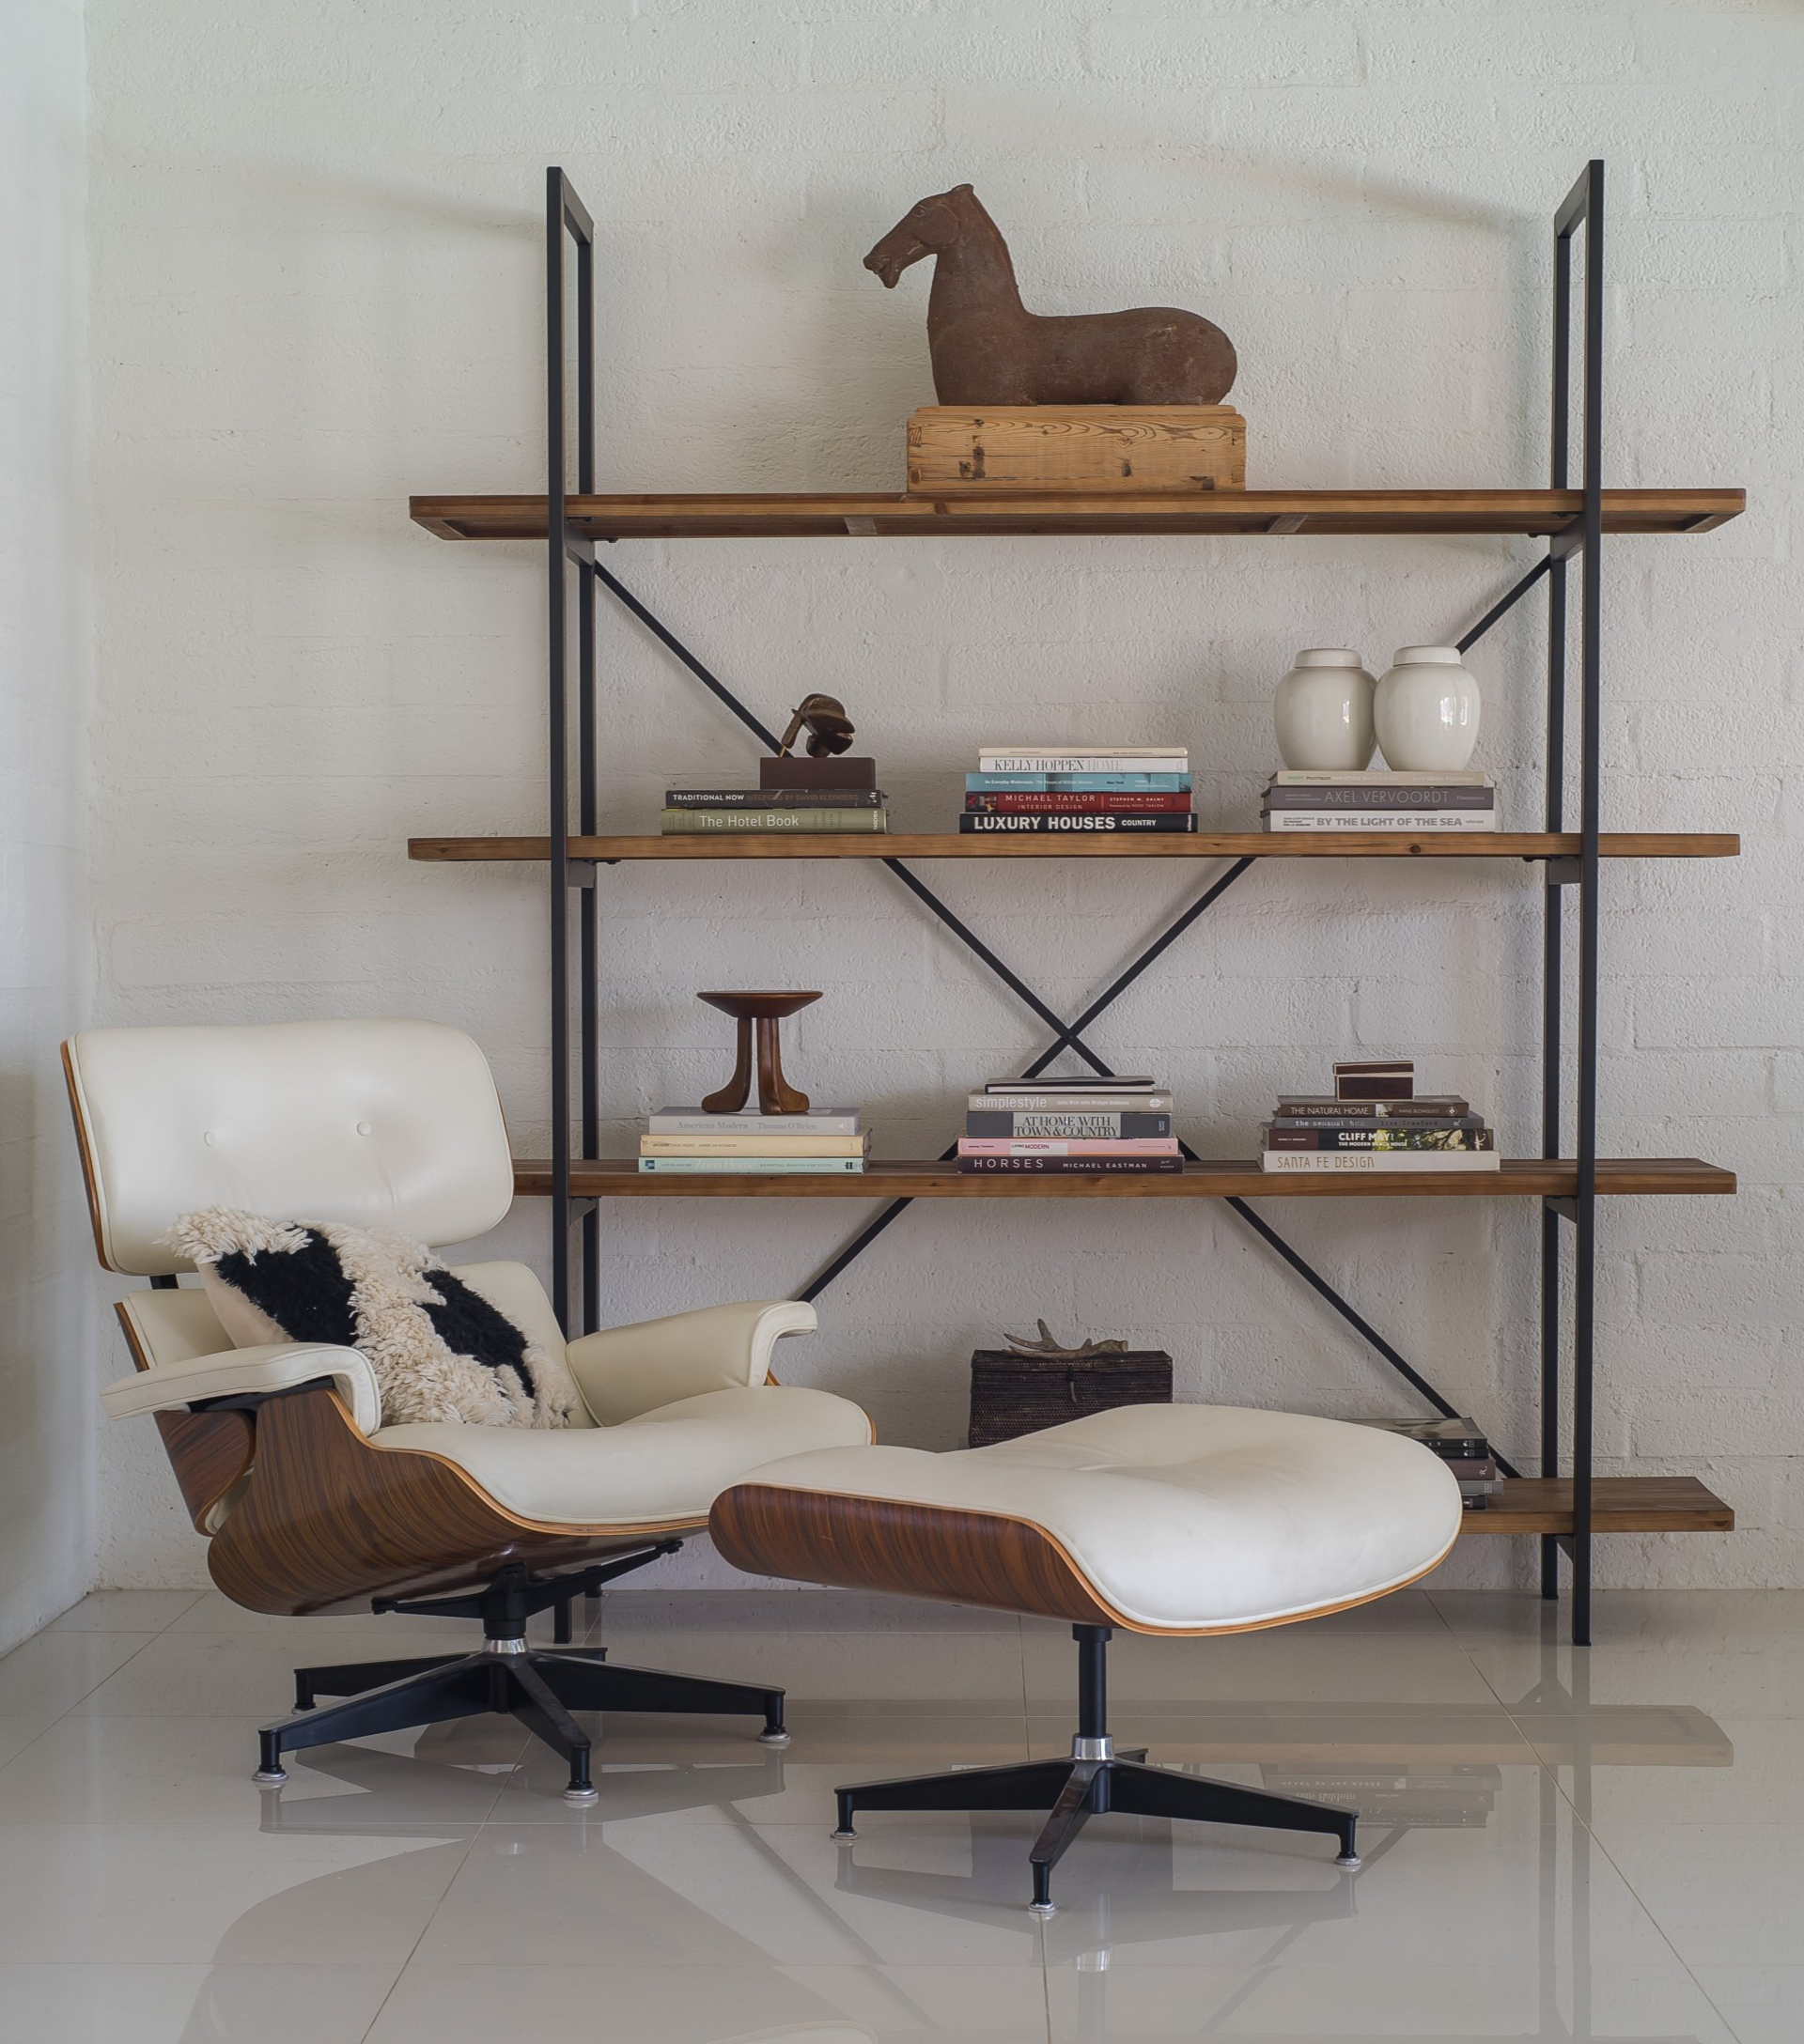 image of living room designed by dakota designworks